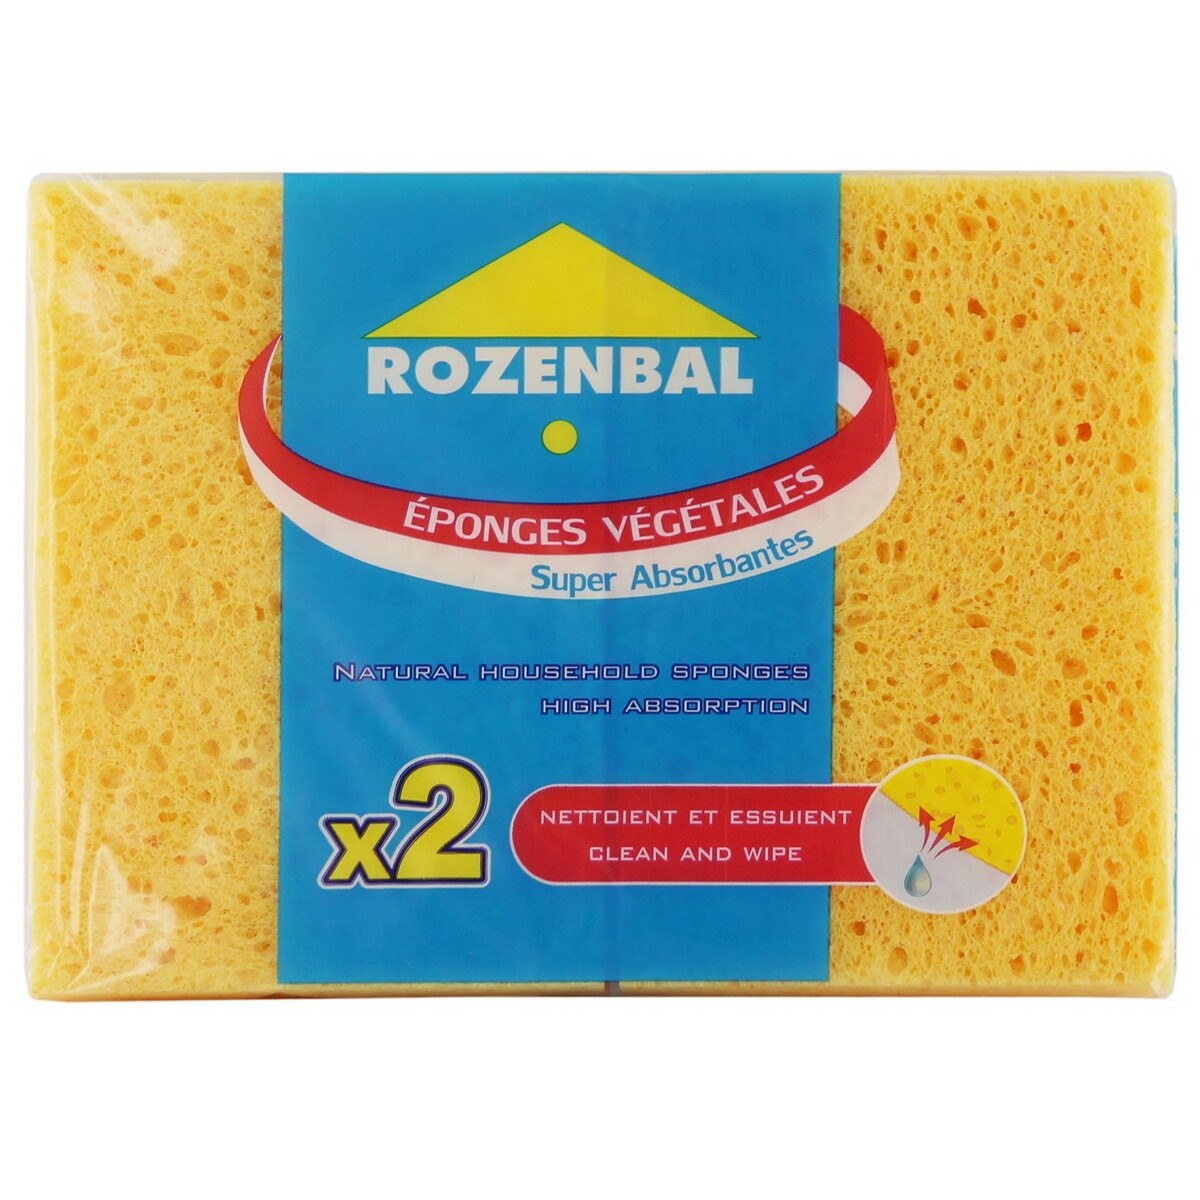 Rozenbal Sponge Veg 2pcs